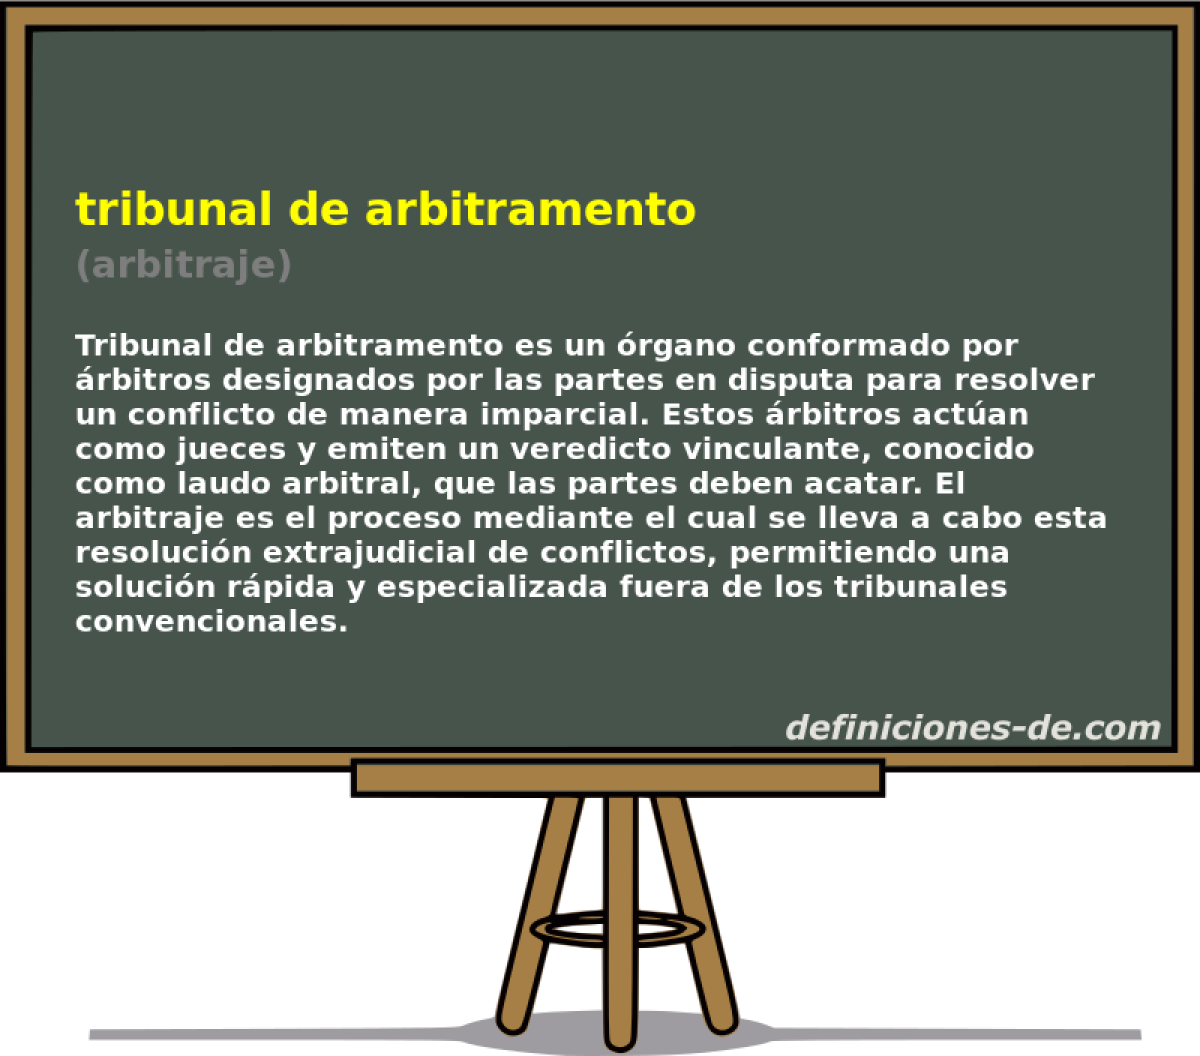 tribunal de arbitramento (arbitraje)